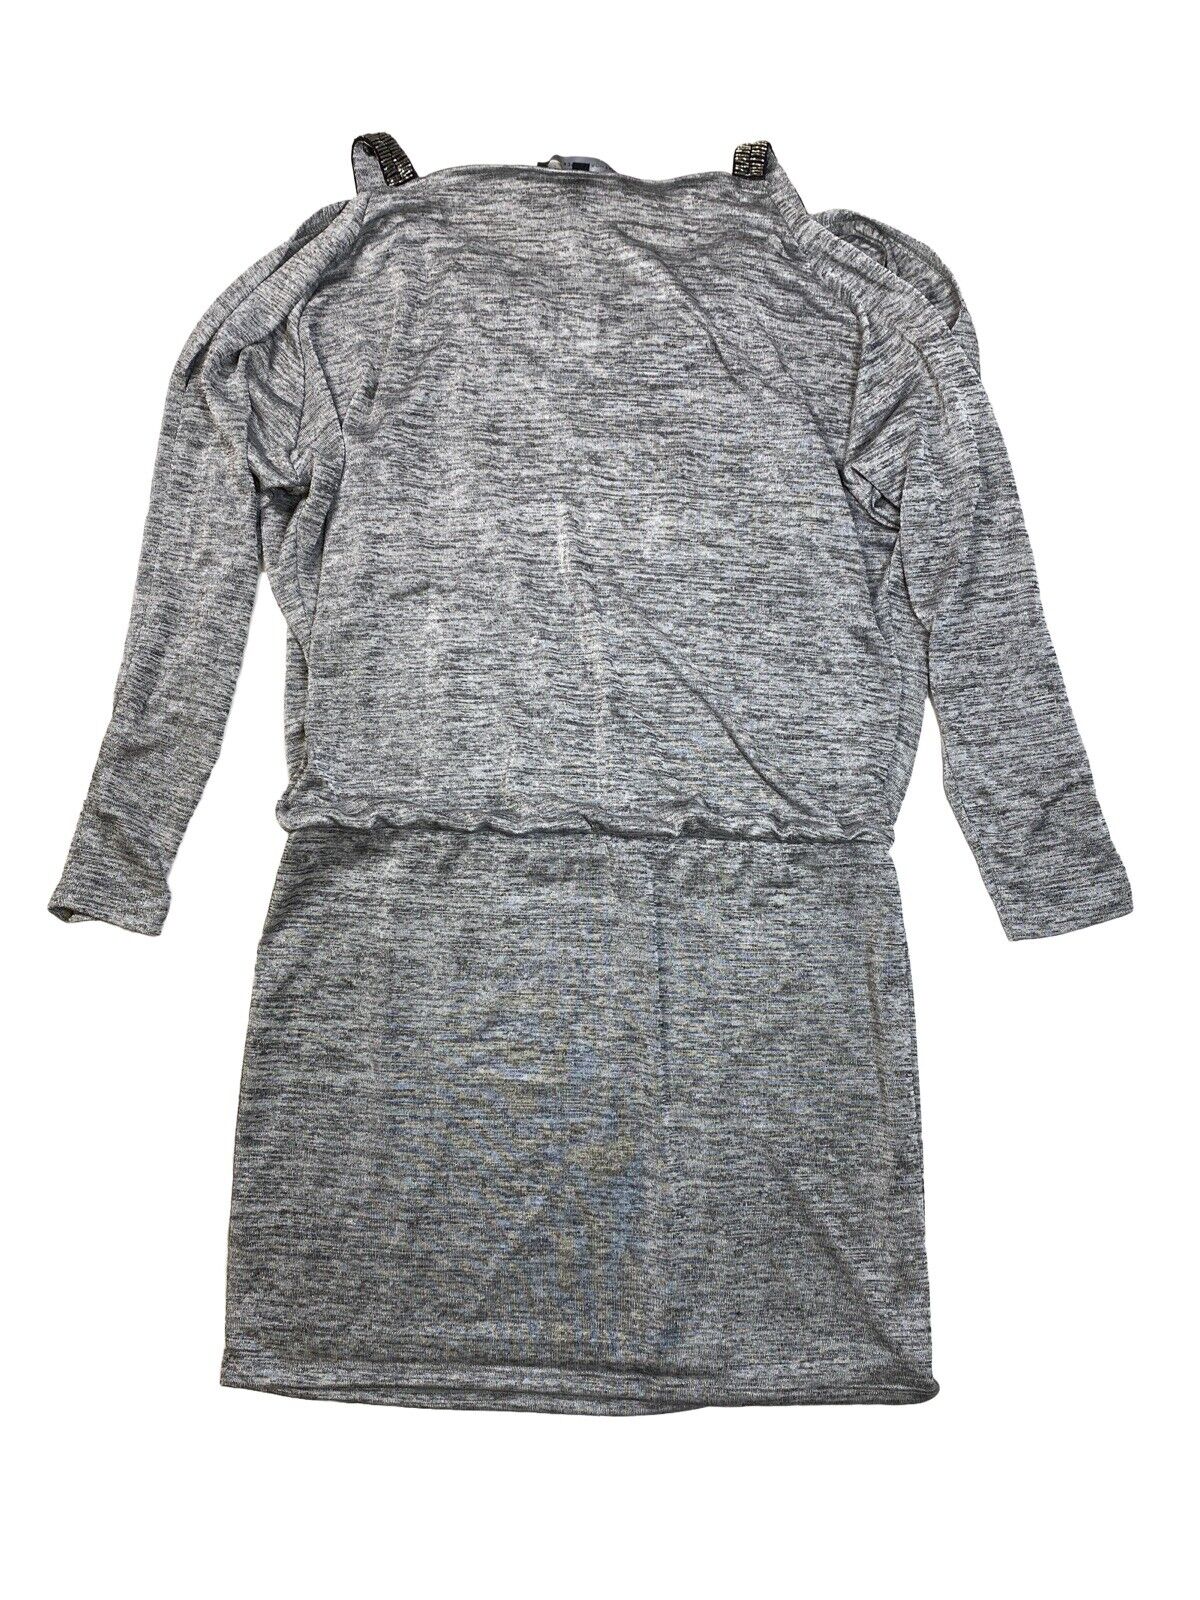 NEW White House Black Market Women's Gray Cold Shoulder Blouson Dress - S